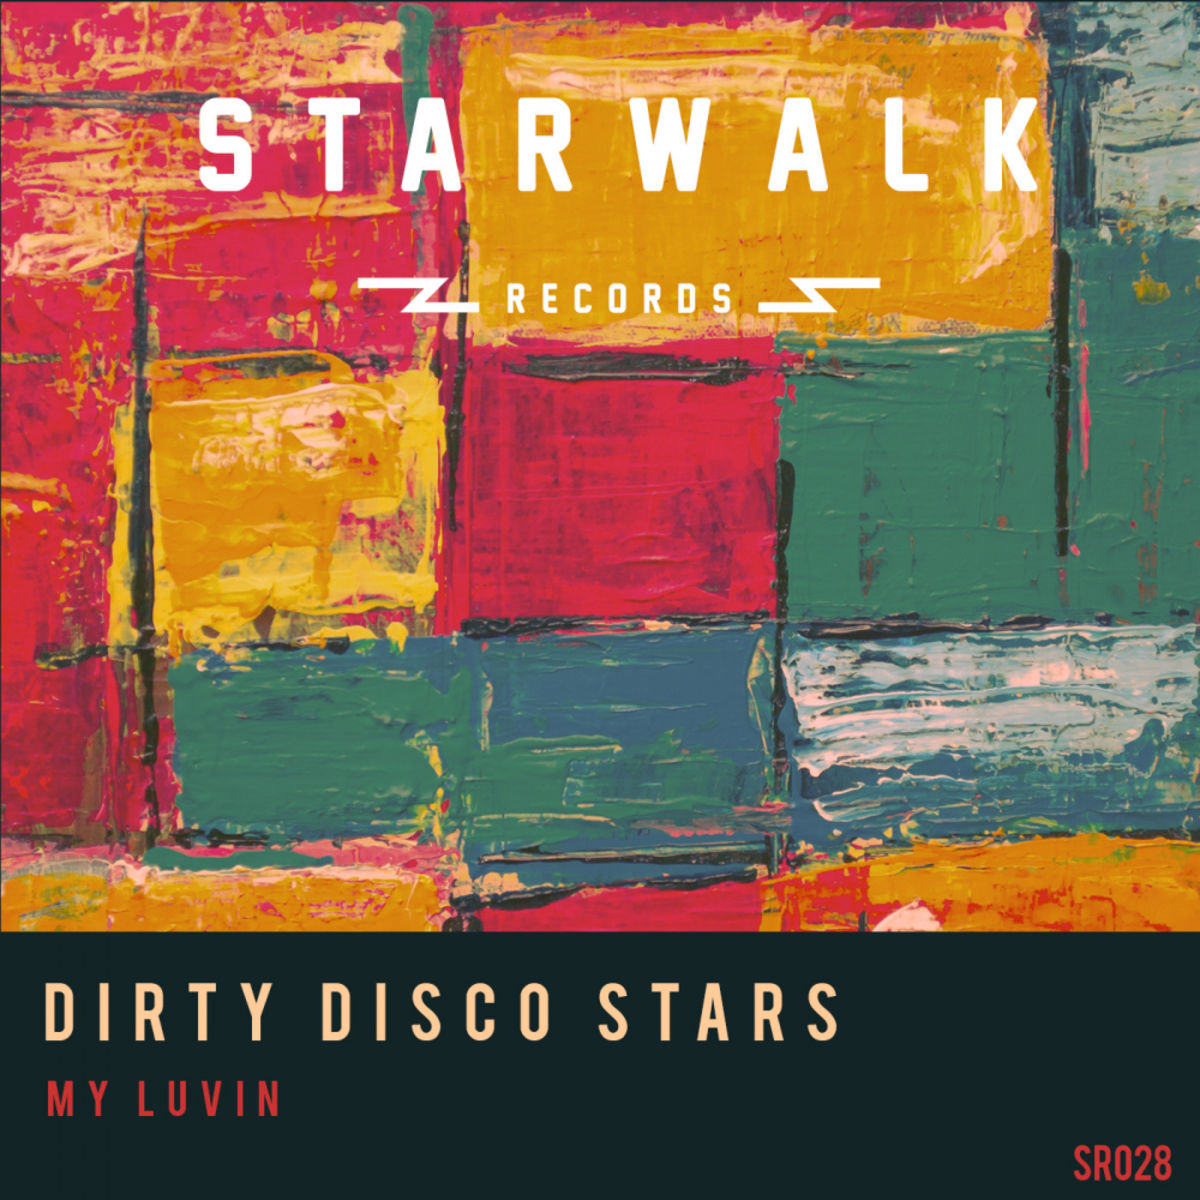 Dirty Disco Stars - My Luvin / Starwalk Records